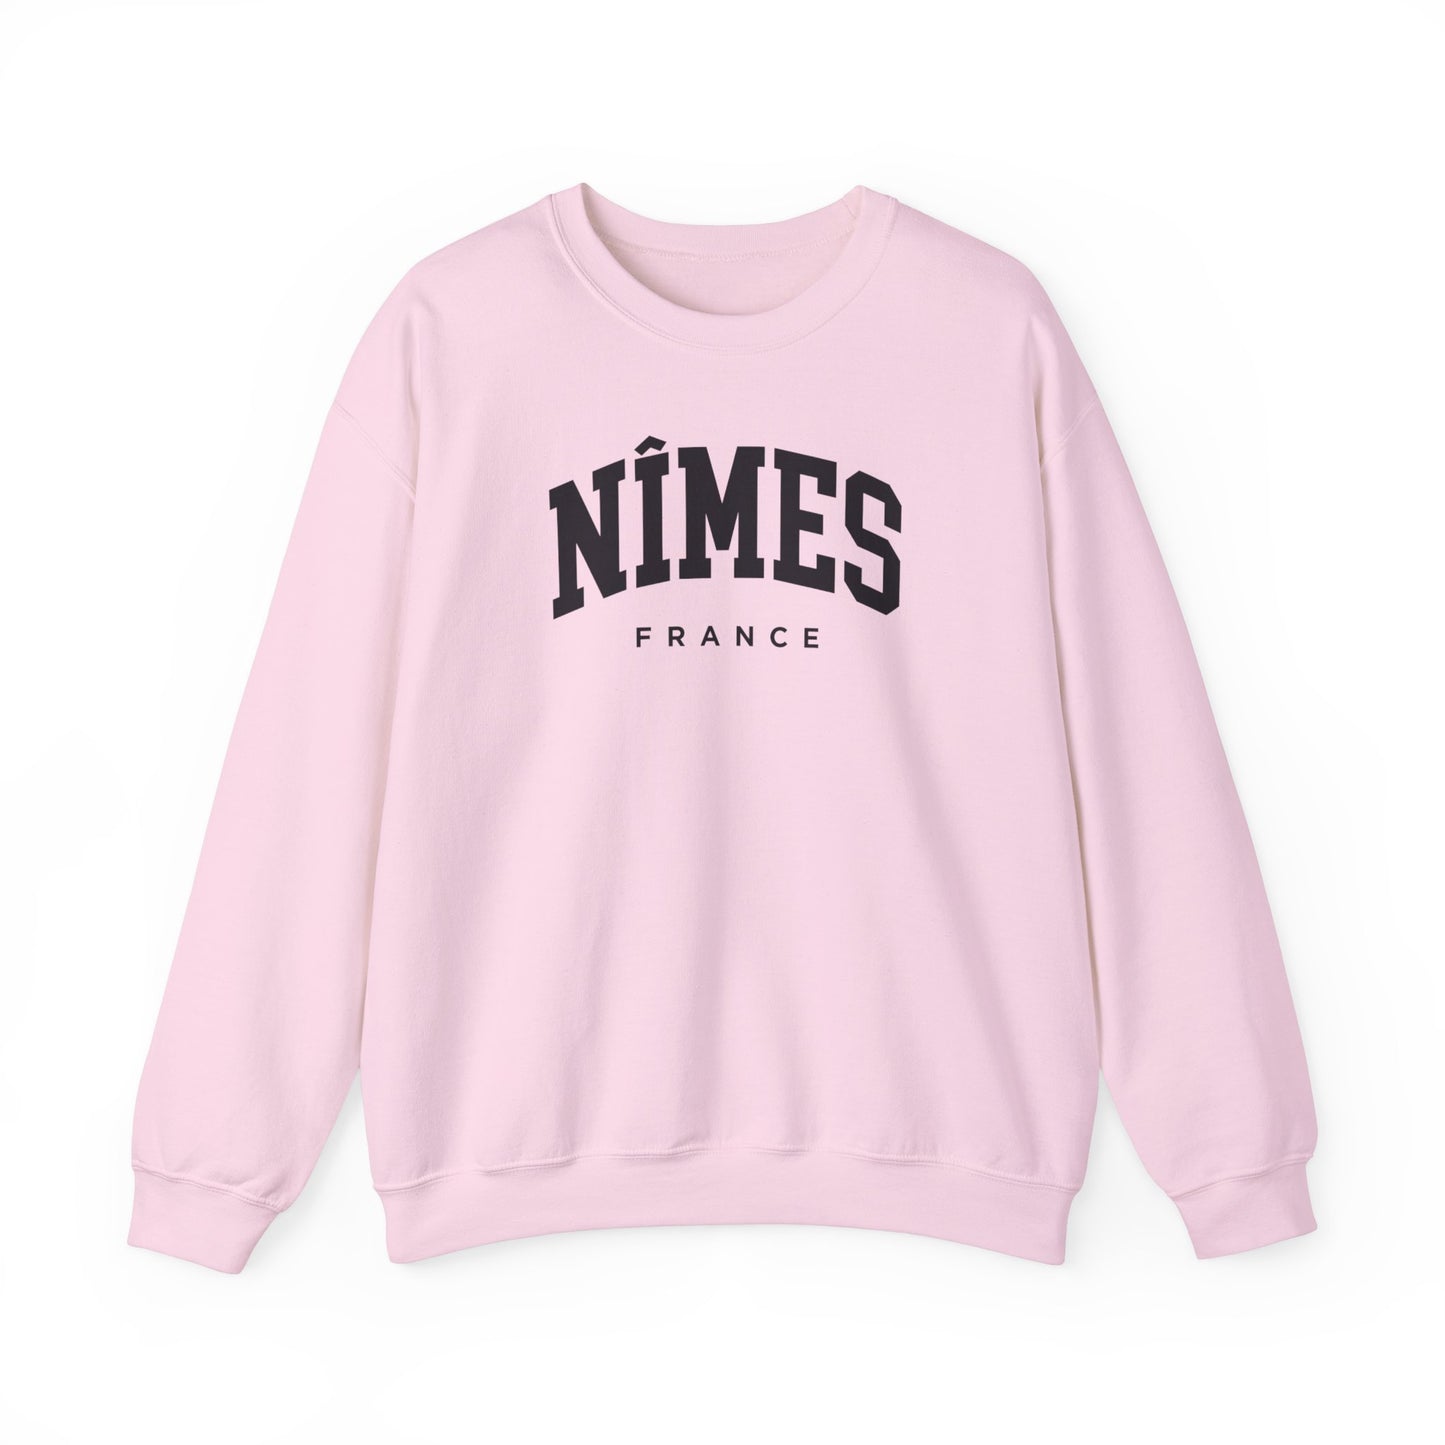 Nîmes France Sweatshirt